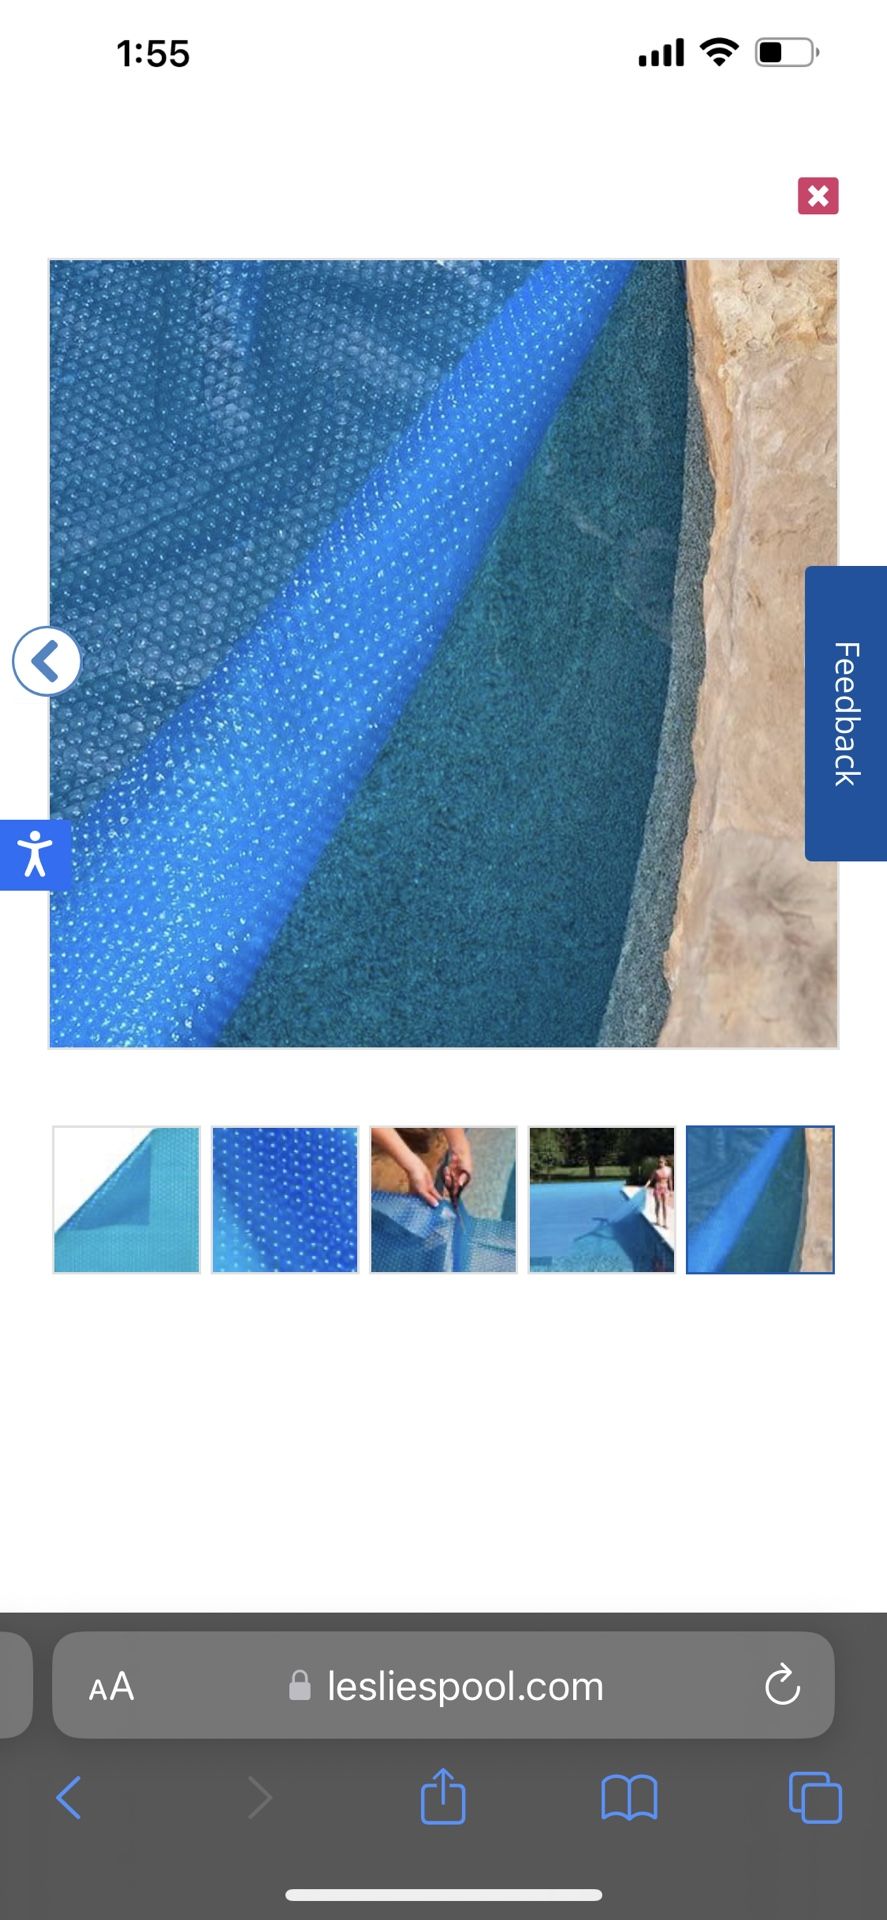 Pool Solar Blanket 